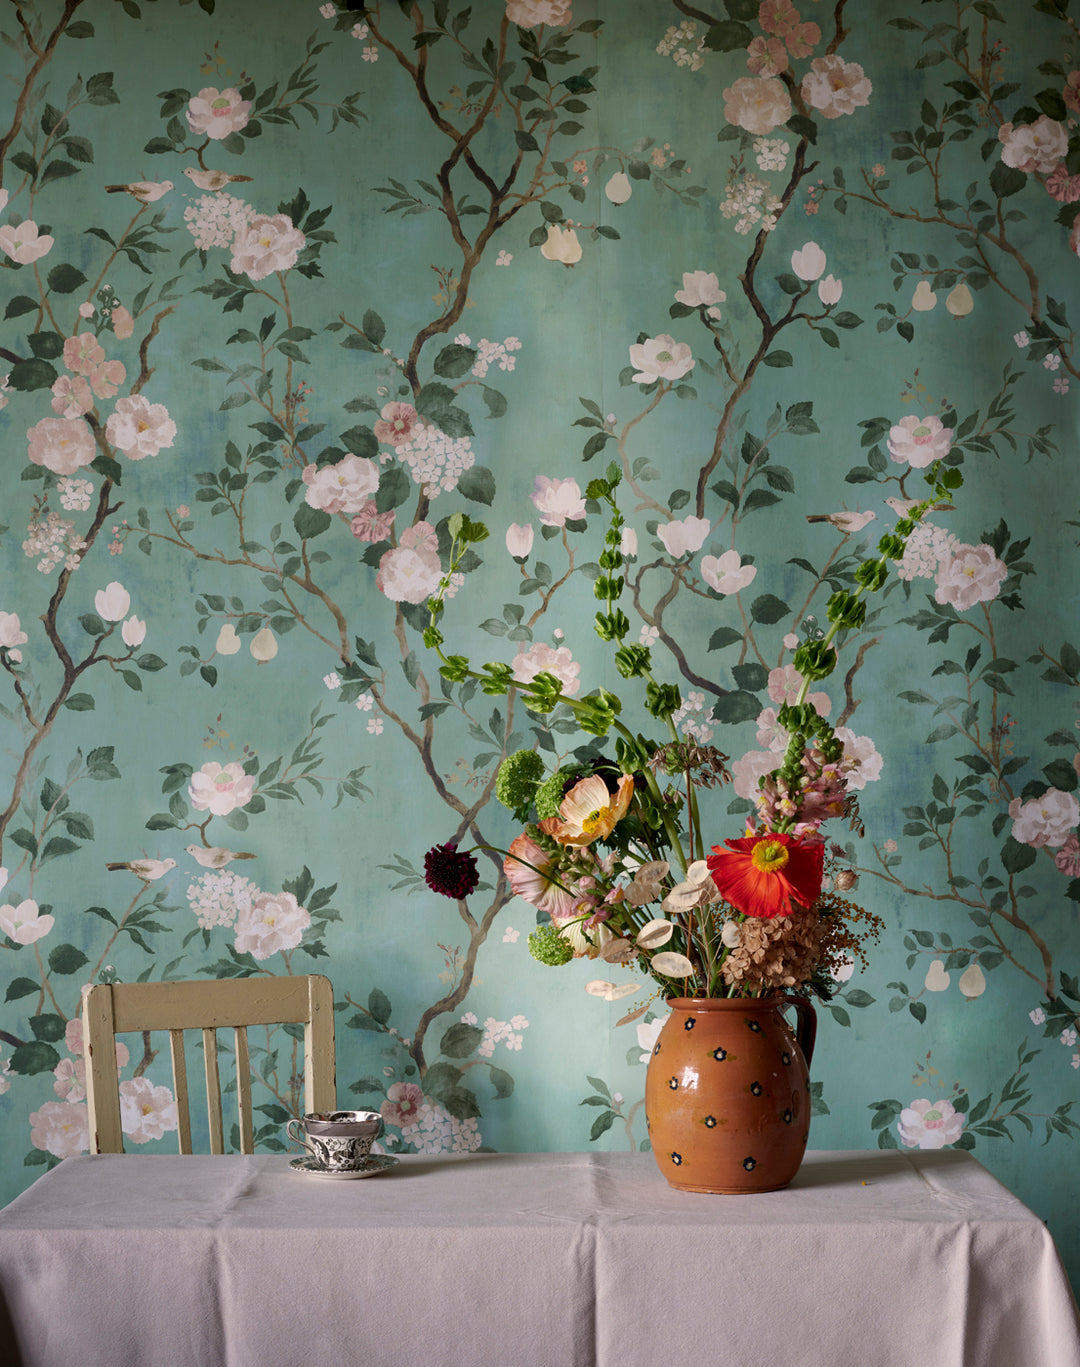 Flora-Roberts-Wallpaper-Hamilton-Weston-Peony-Garden-wall-mural-trailing-garden-prony-blossom-flowers-birds-pears-green-Celadon